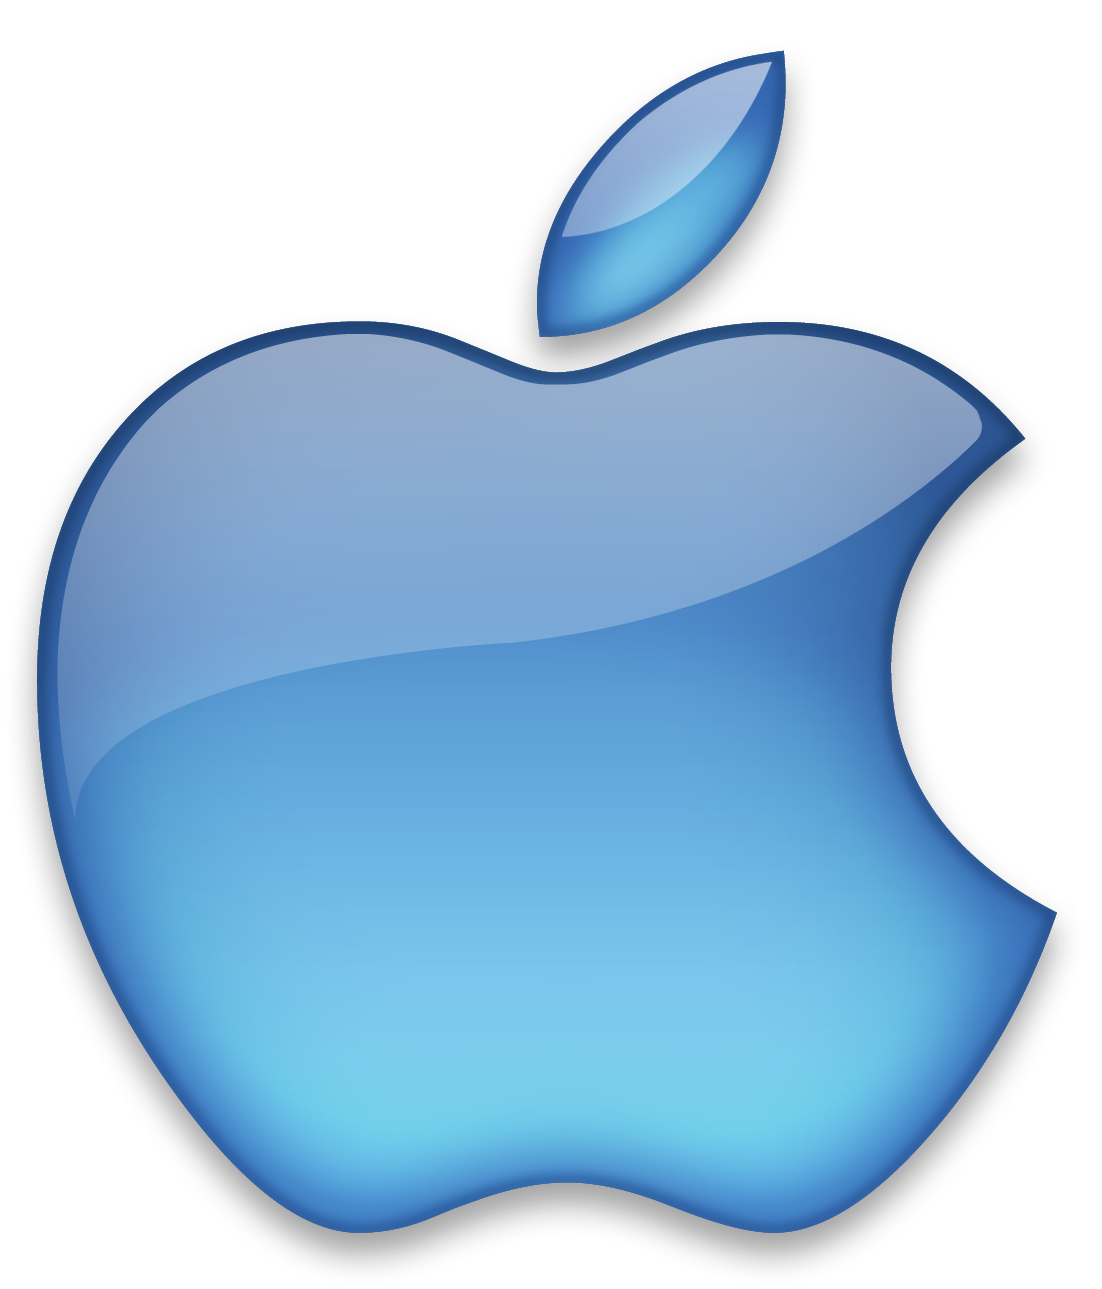 apple-logo-80.png?nocache=1316560893534